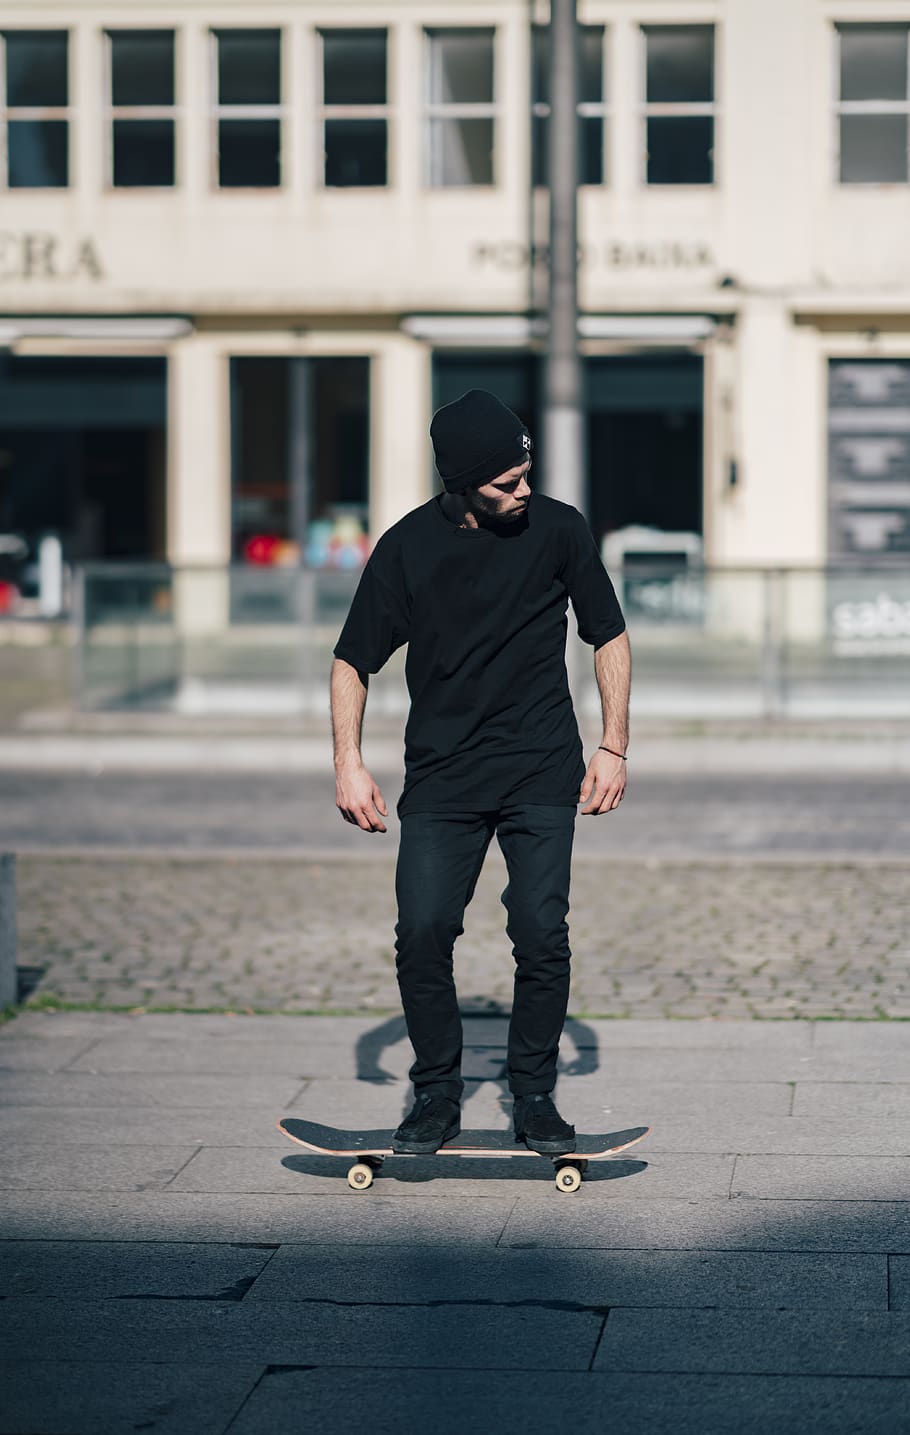 man in black shirt skating on pathway, human, person, apparel